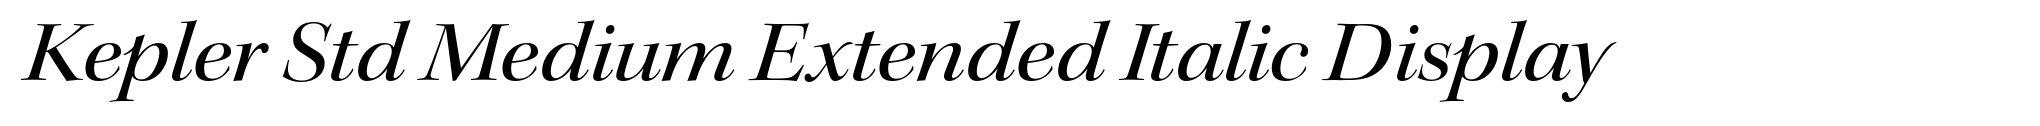 Kepler Std Medium Extended Italic Display image